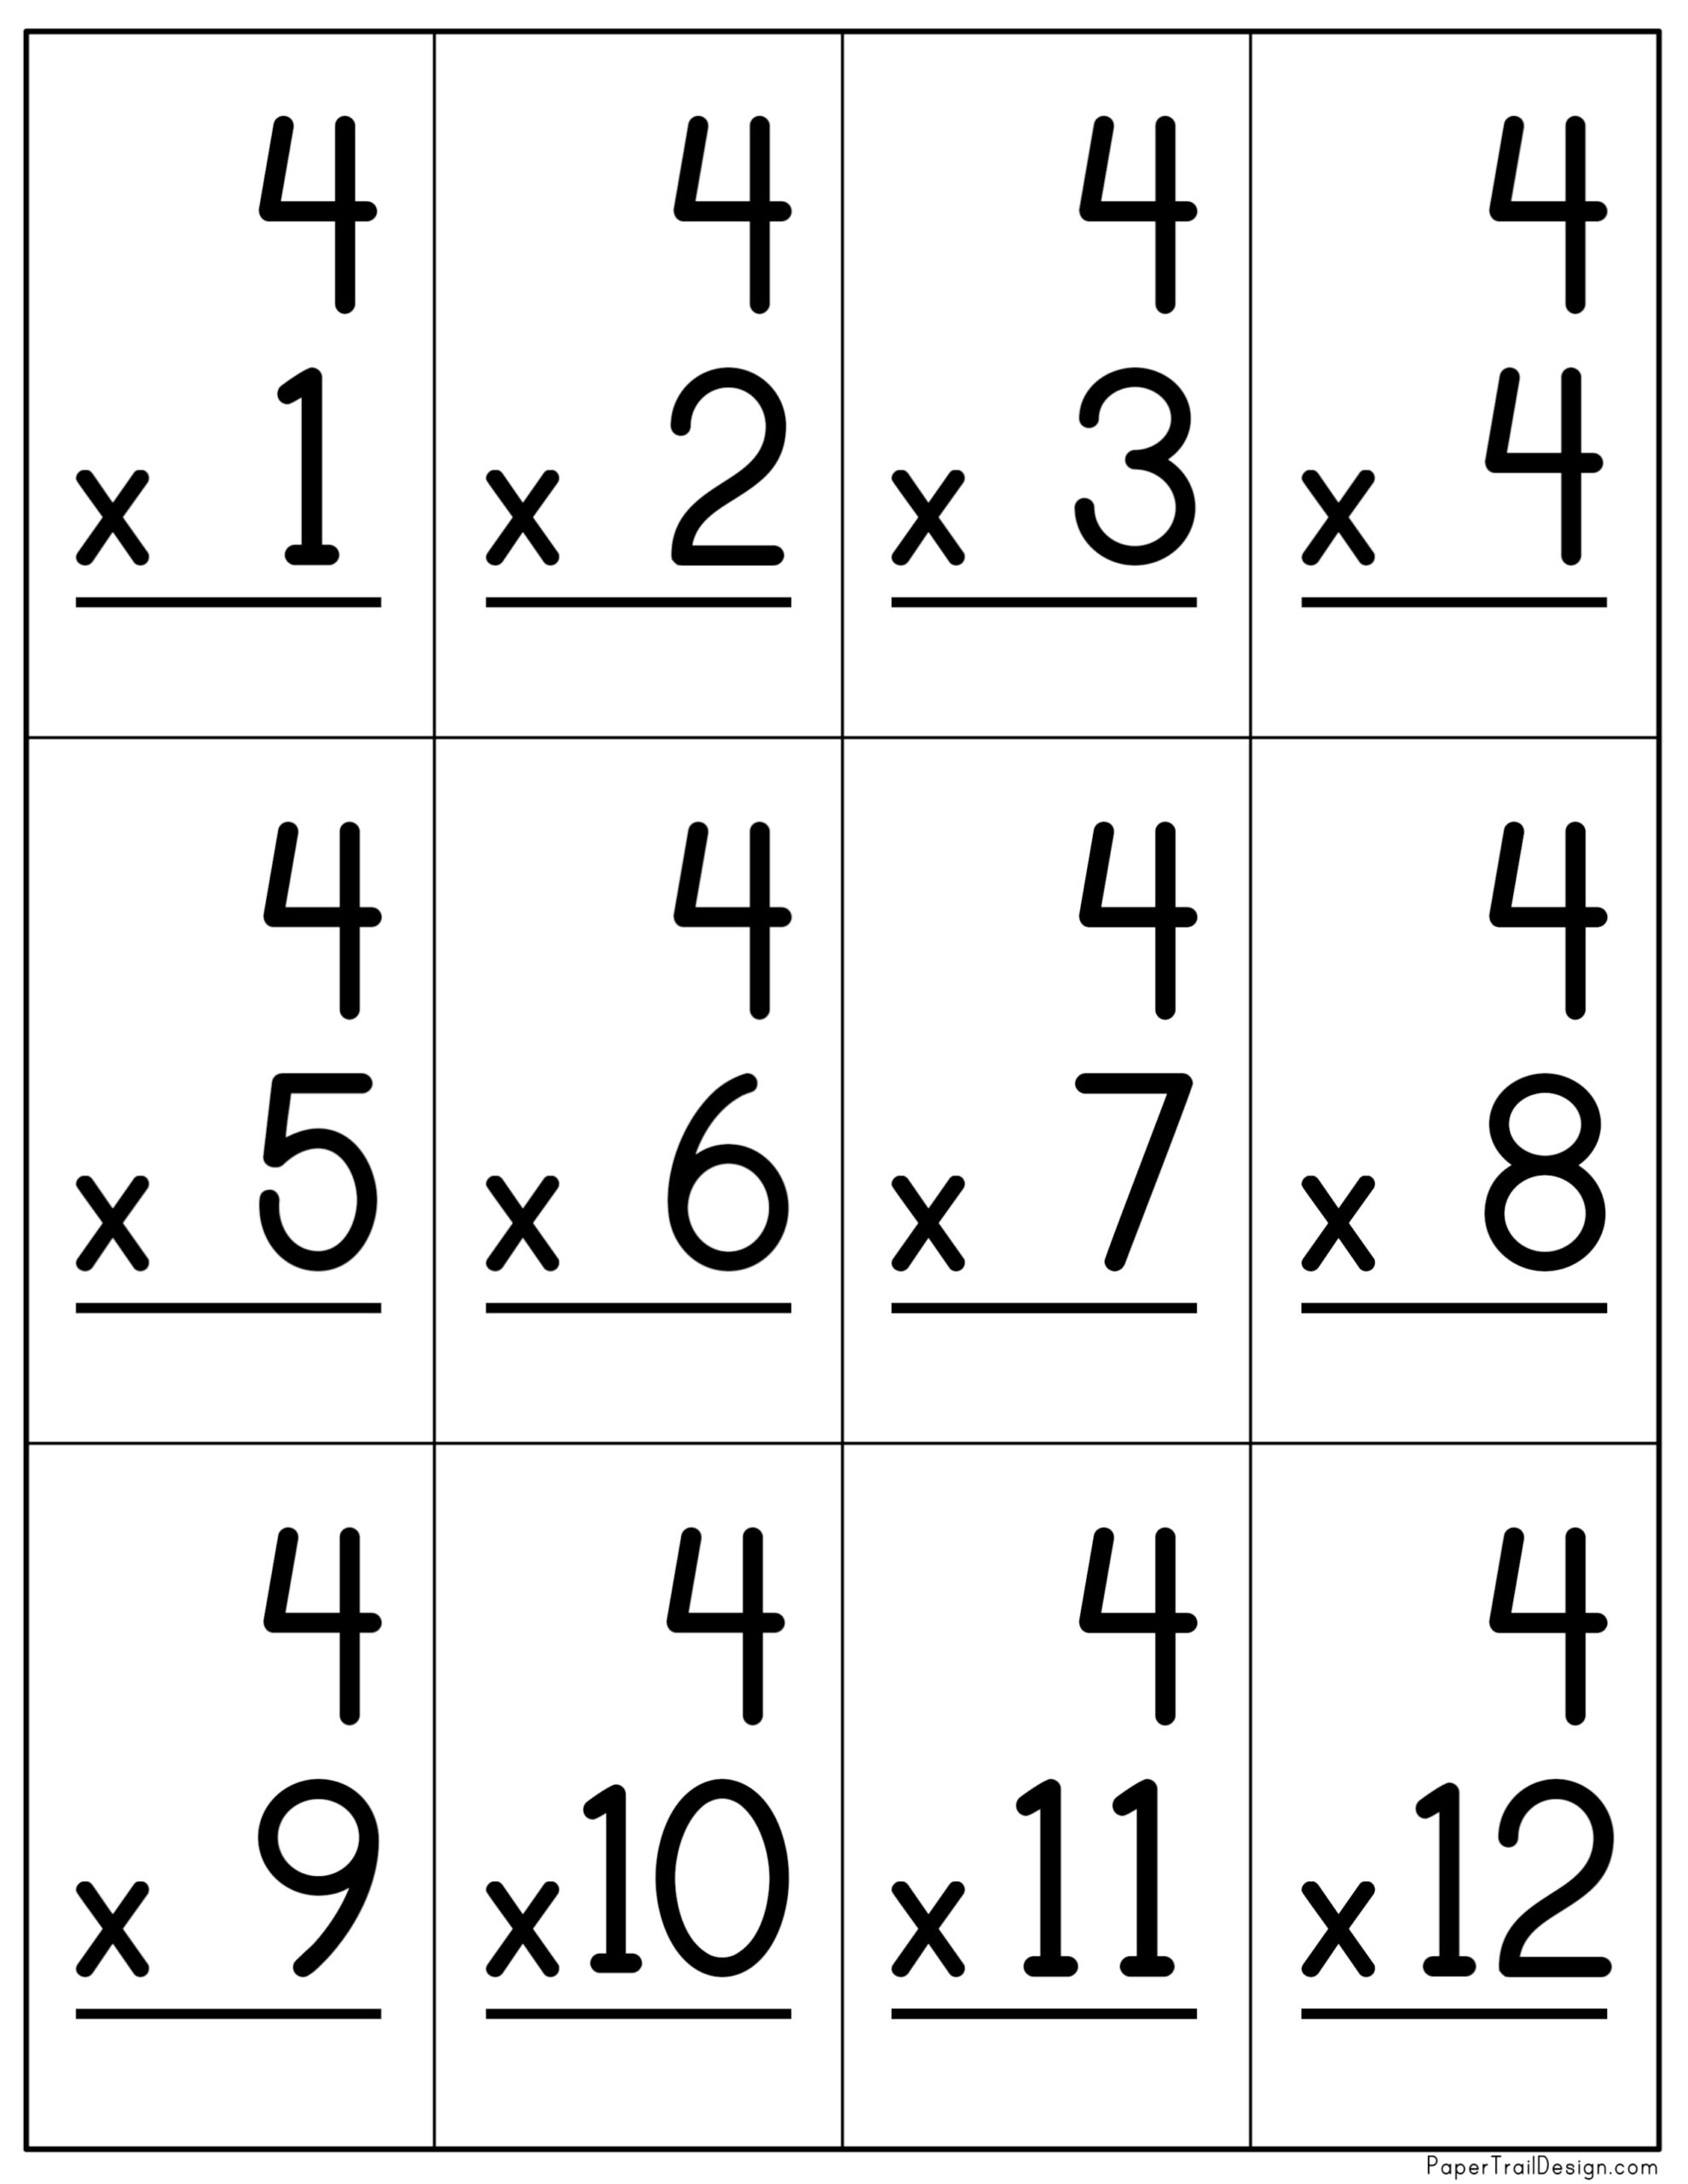 4-s-multiplication-flash-cards-printable-printable-cards